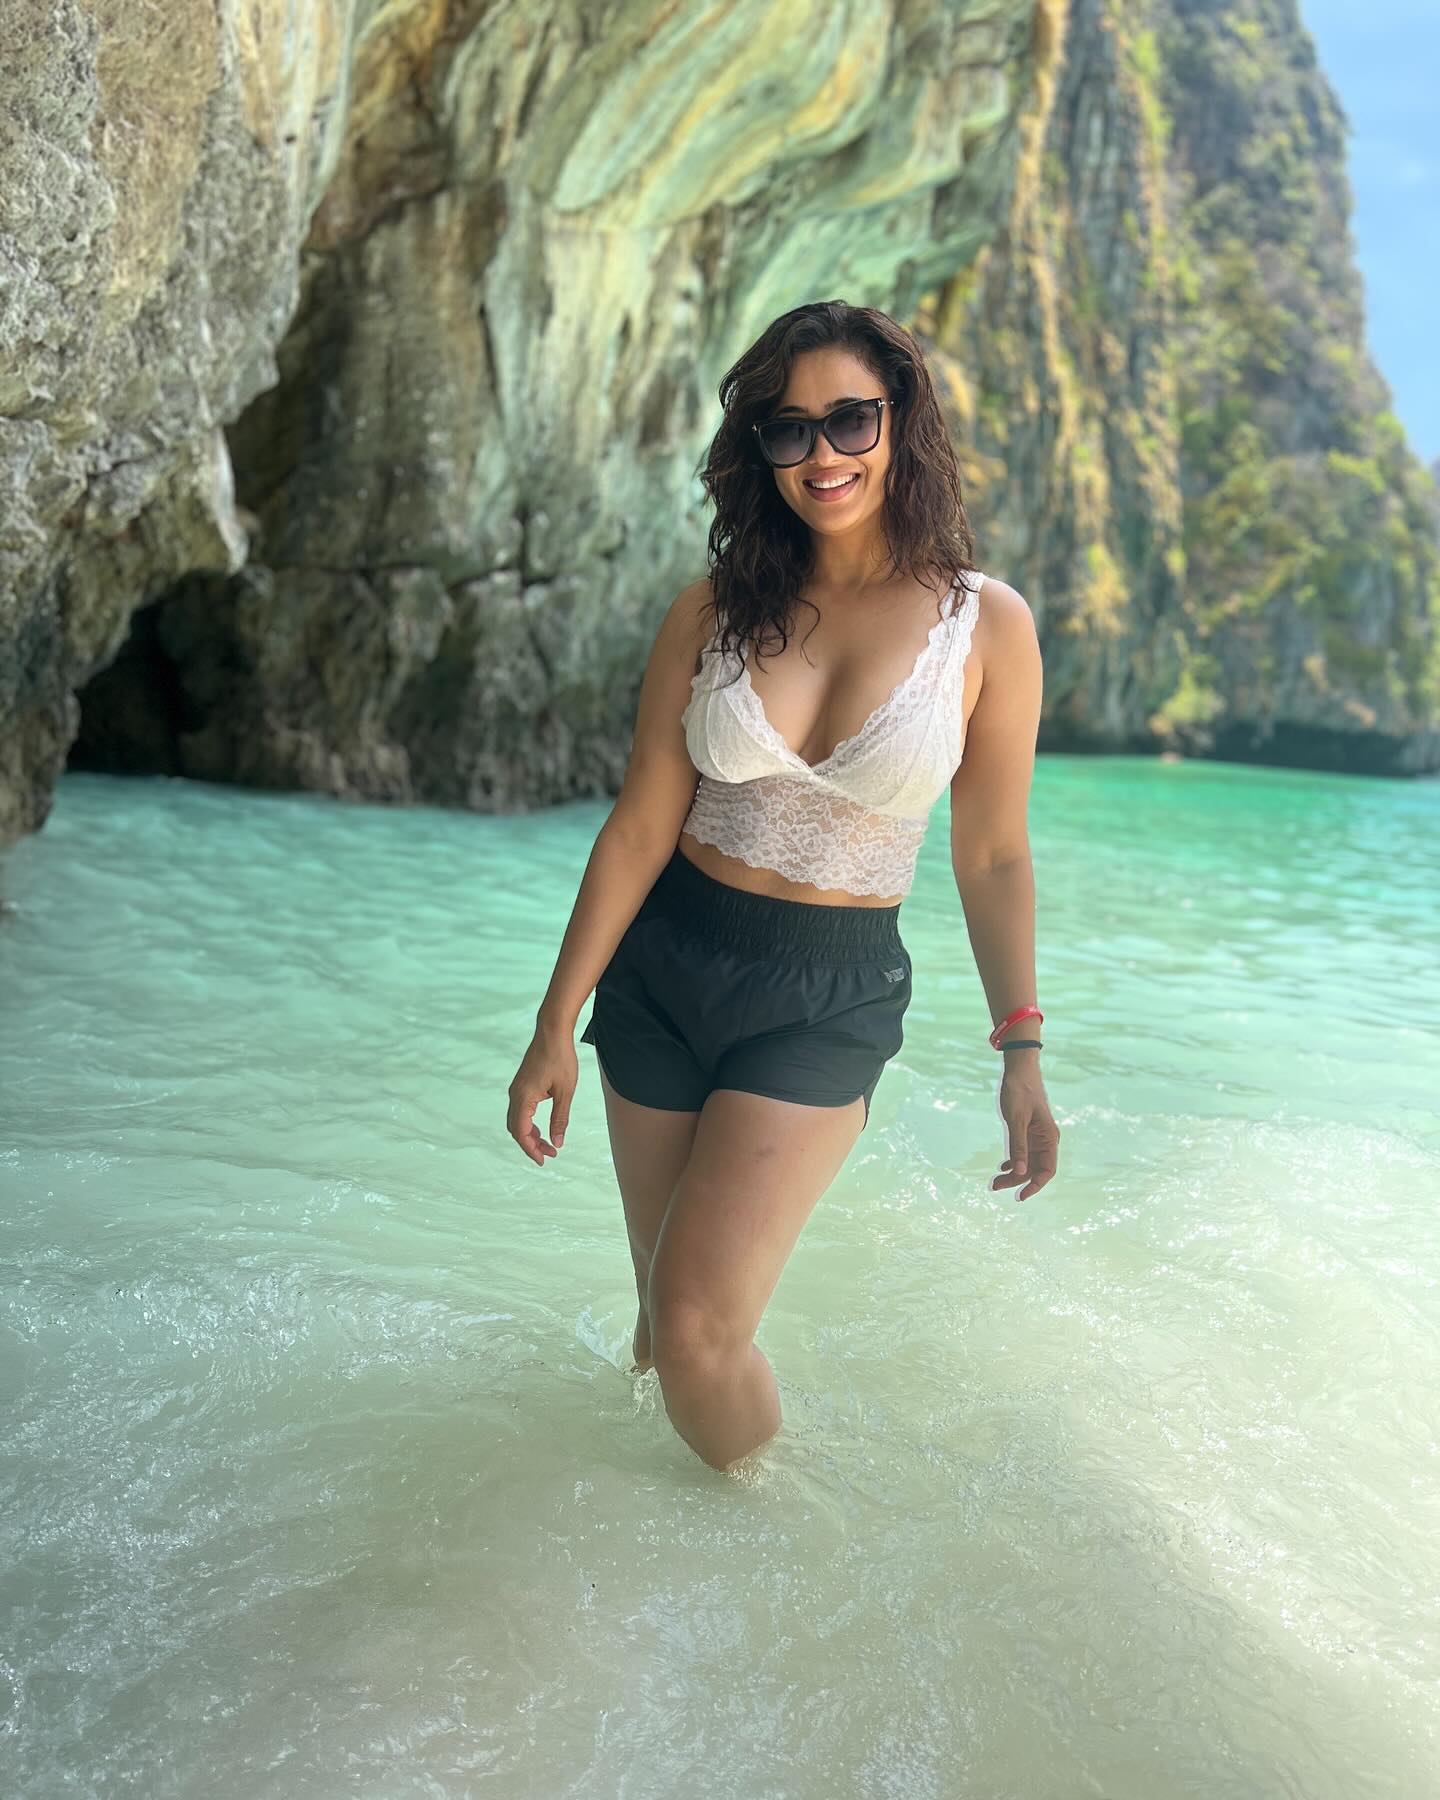 Shweta Tiwari's Sizzling Vacation Snaps from Thailand Break the Internet!